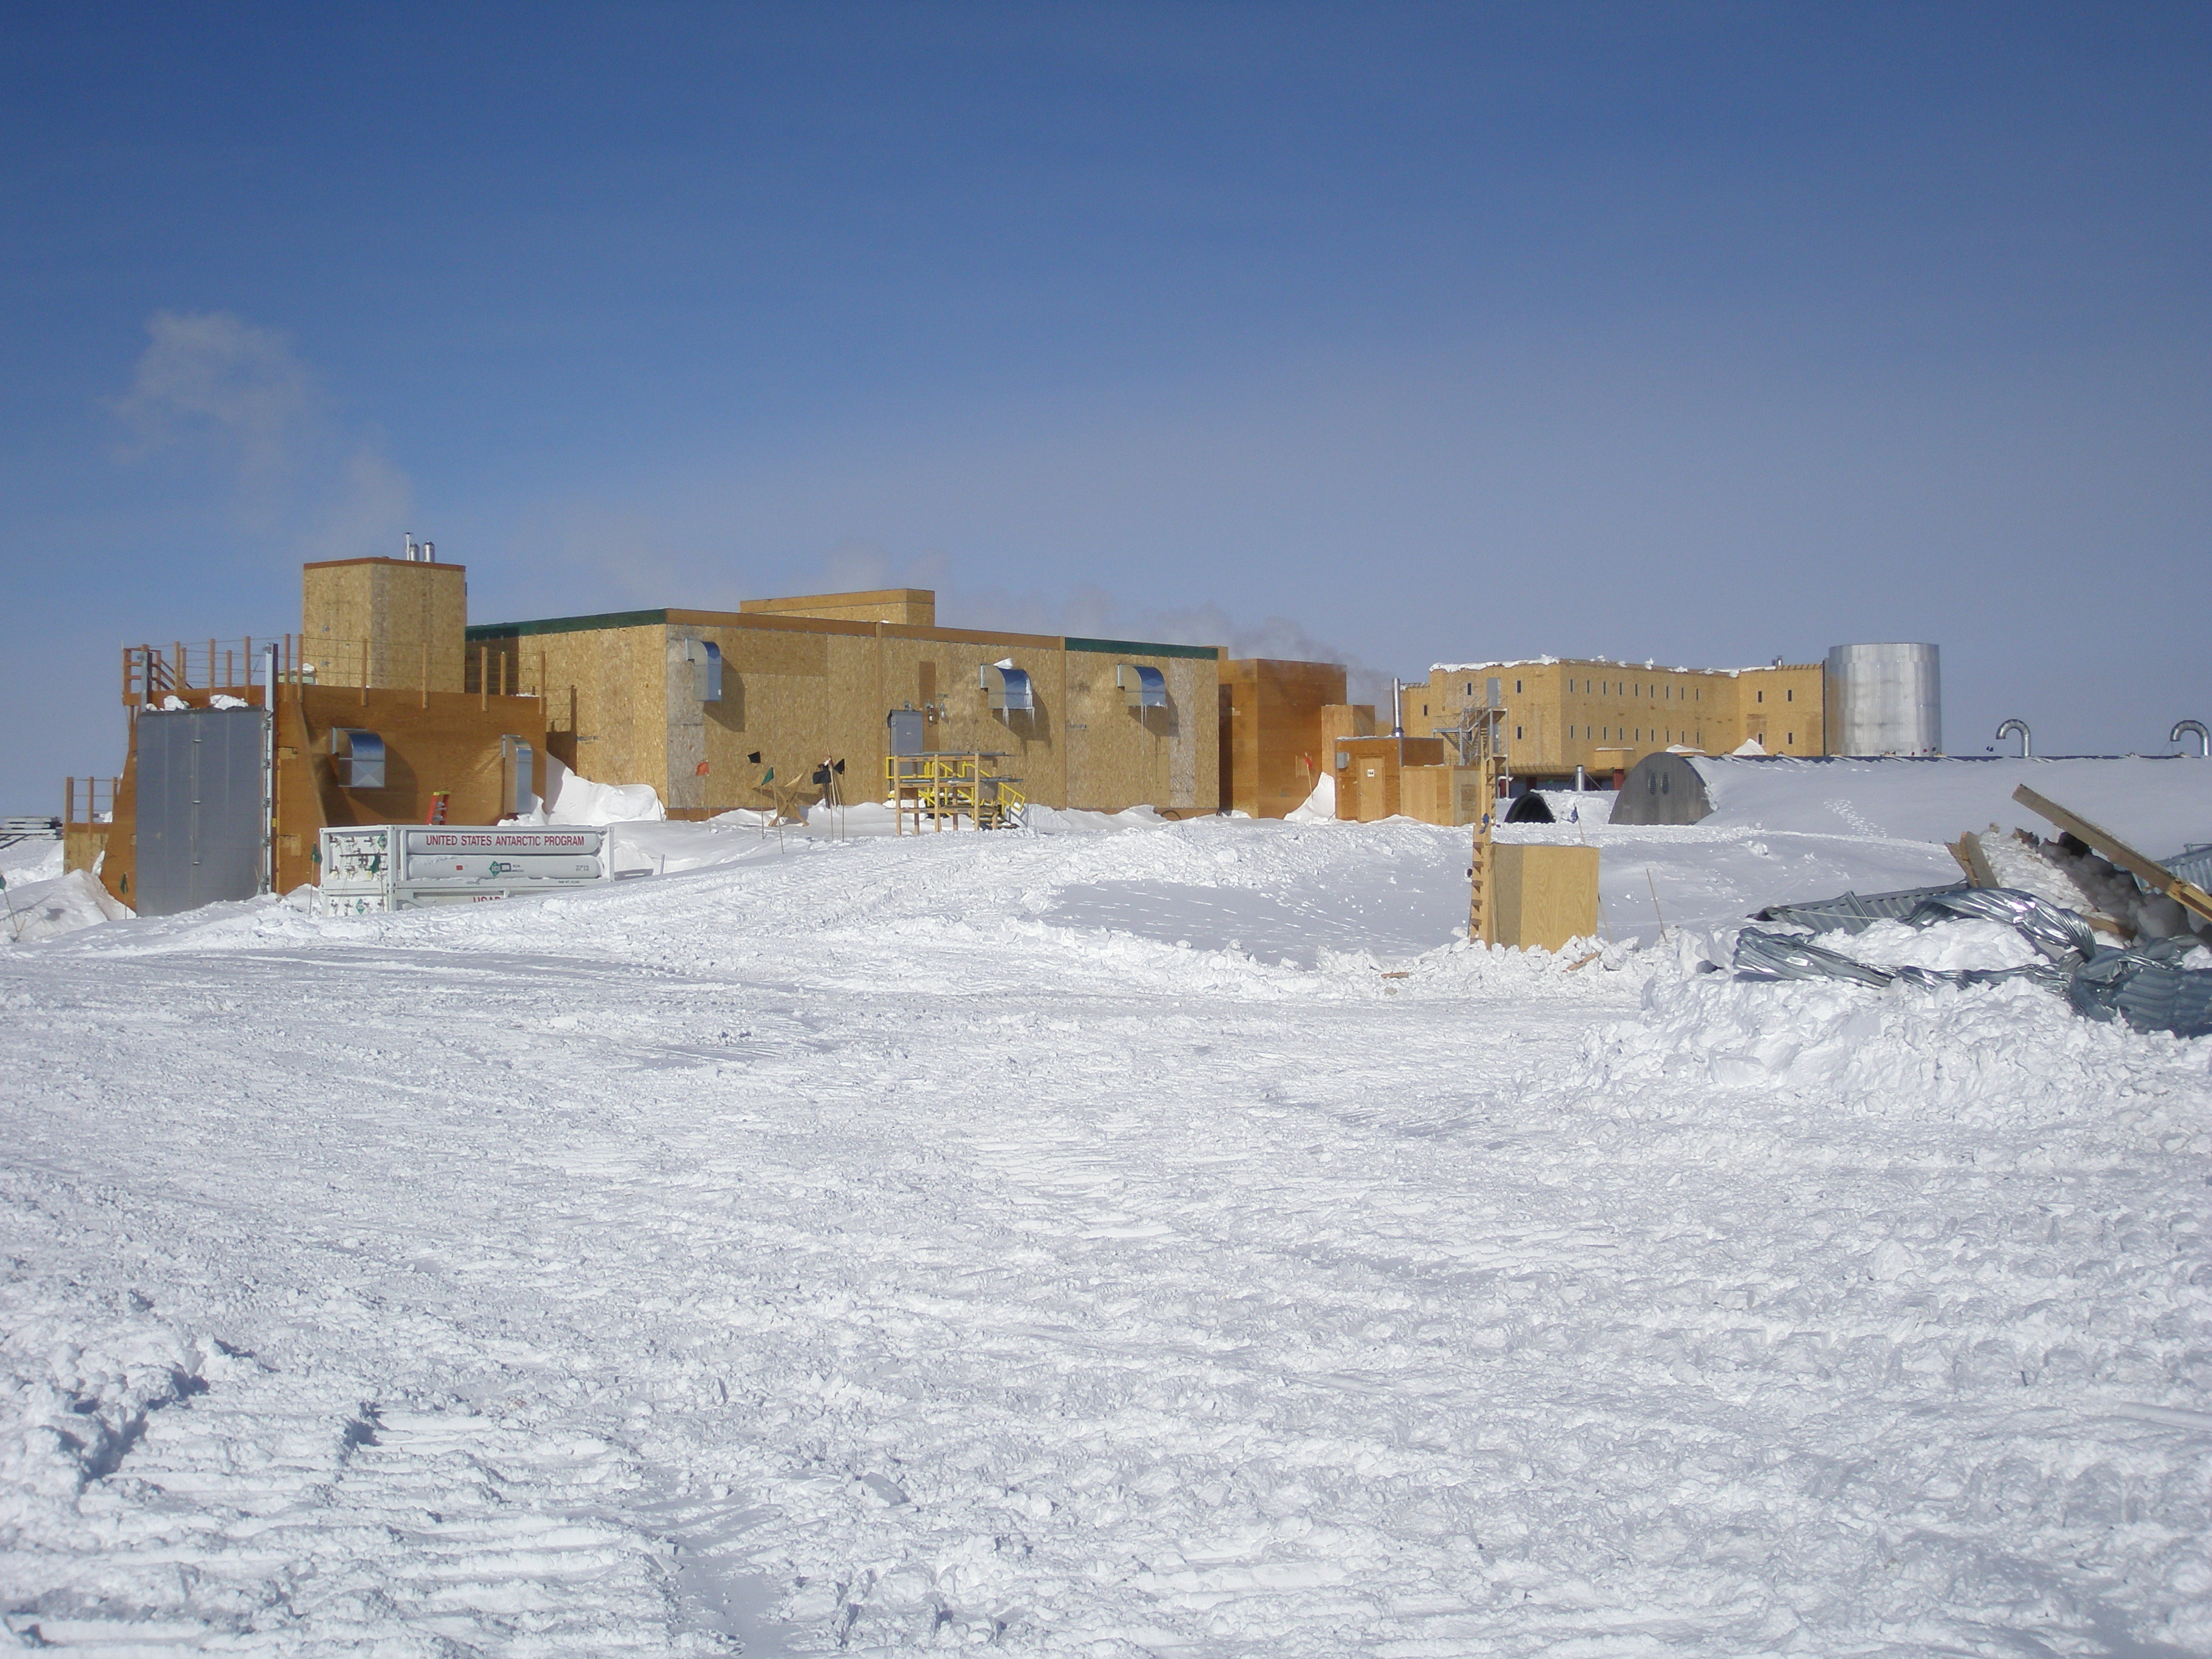 Buildings under construction on a snowy landscape.